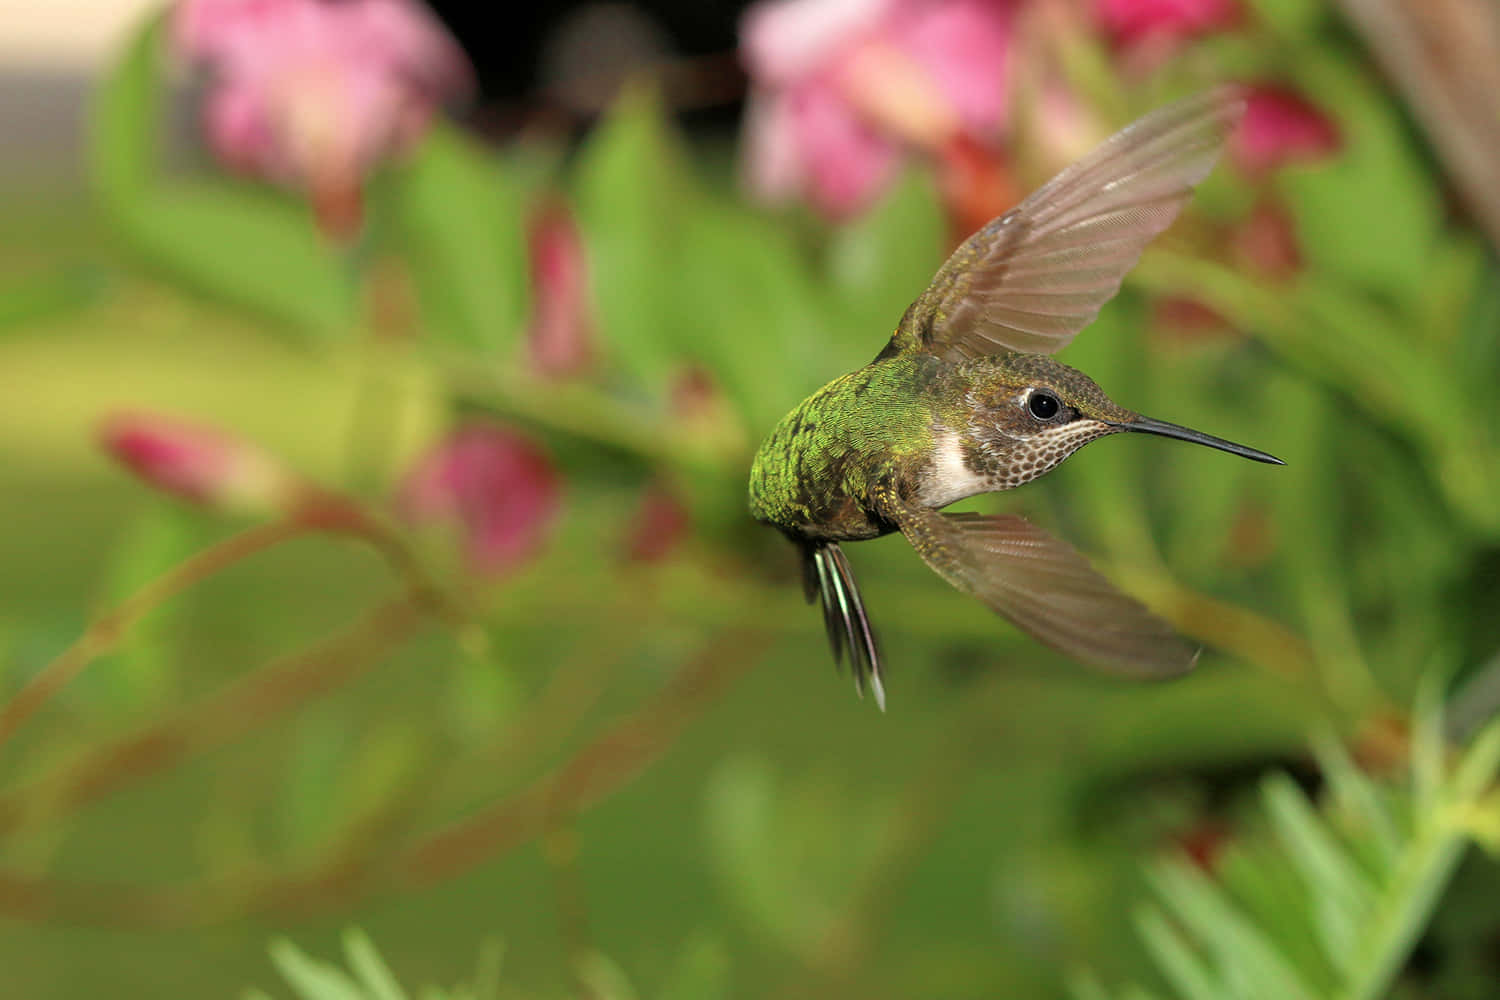 A Female Hummingbird Enjoying a Refreshing Drink of Nectar